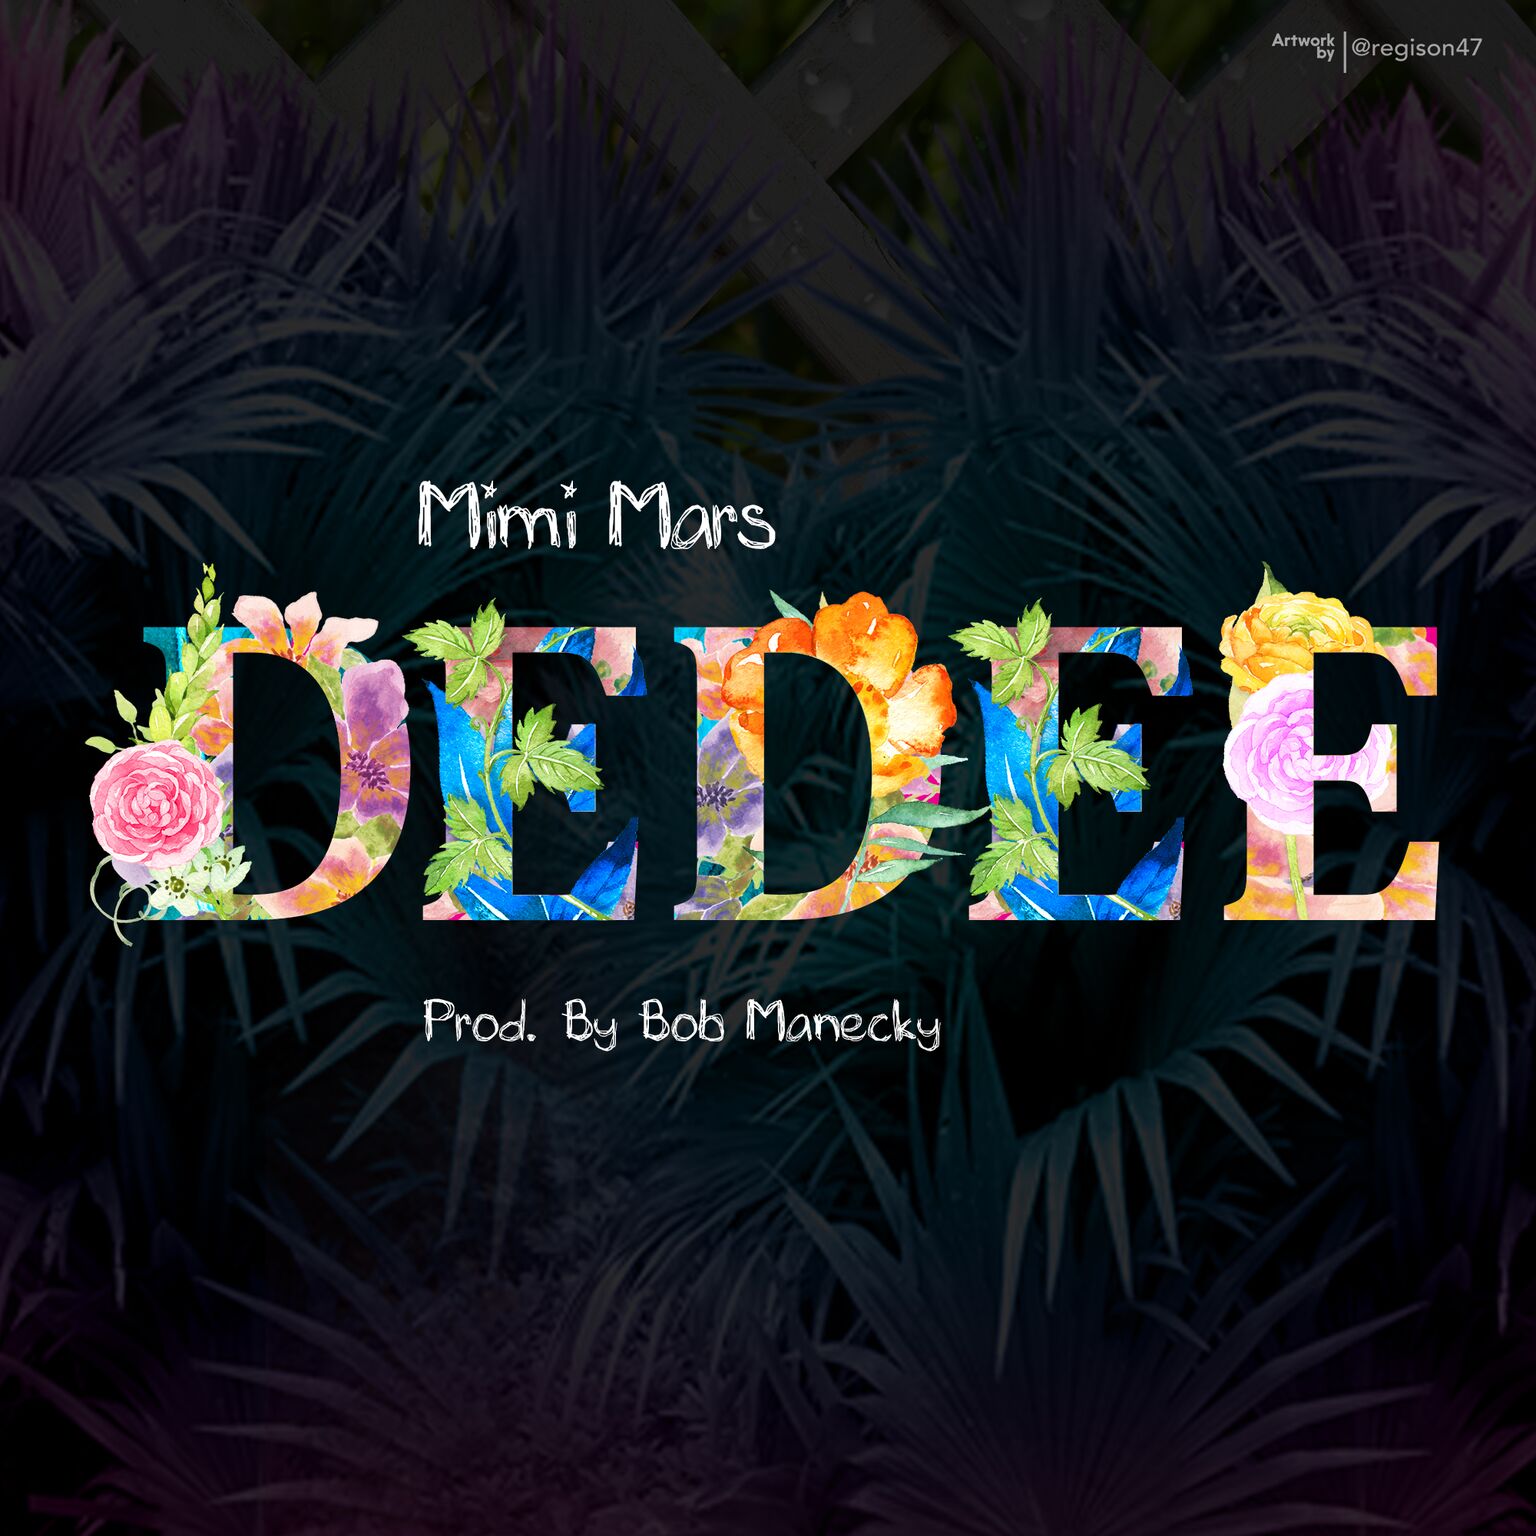 Audio/Video: Mimi Mars – Dedee